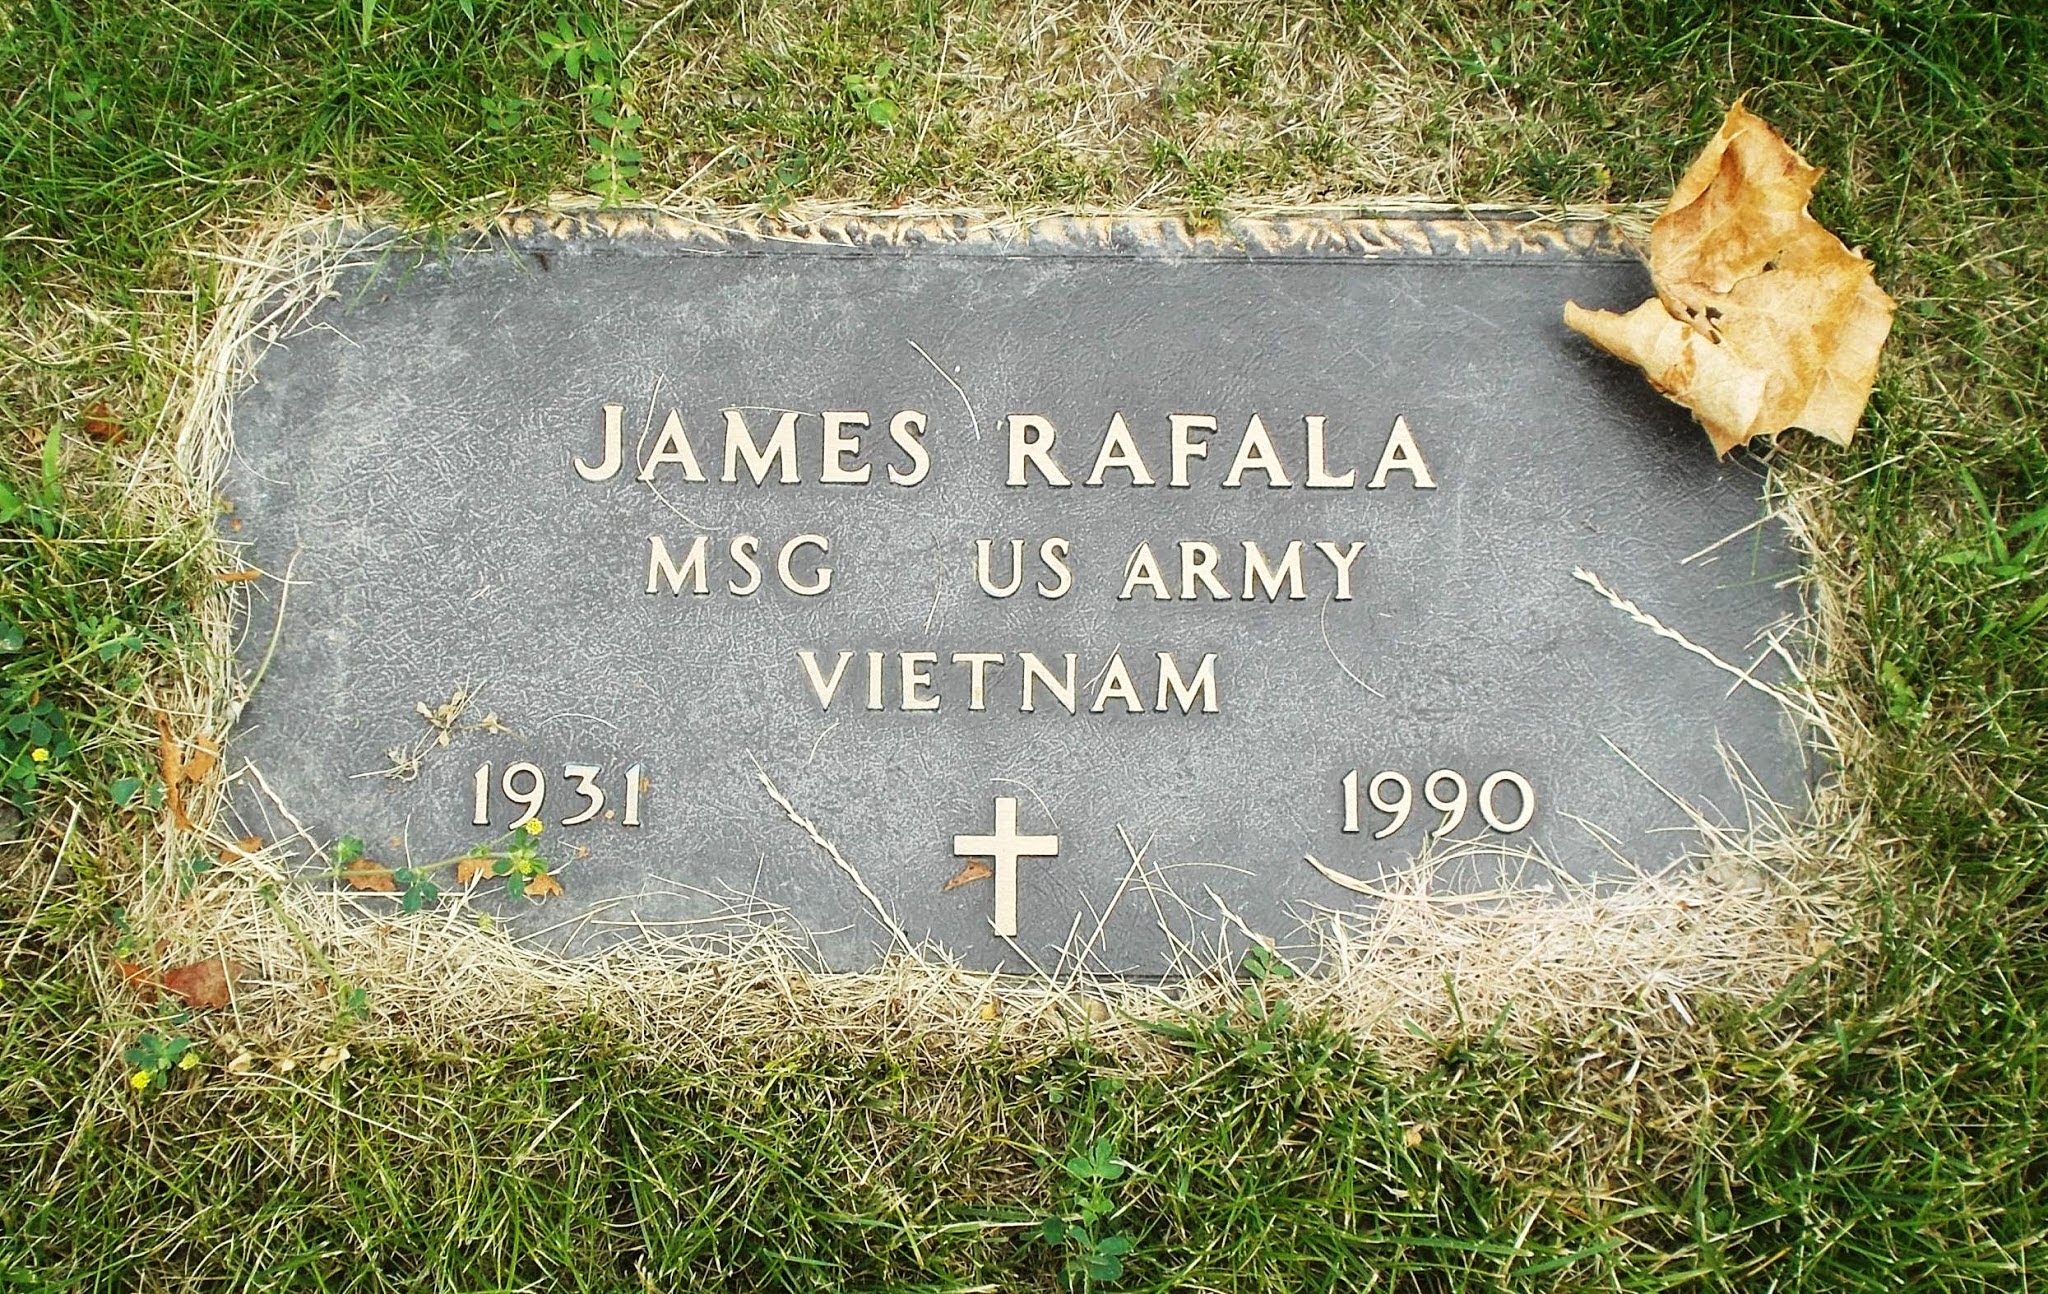 James Rafala